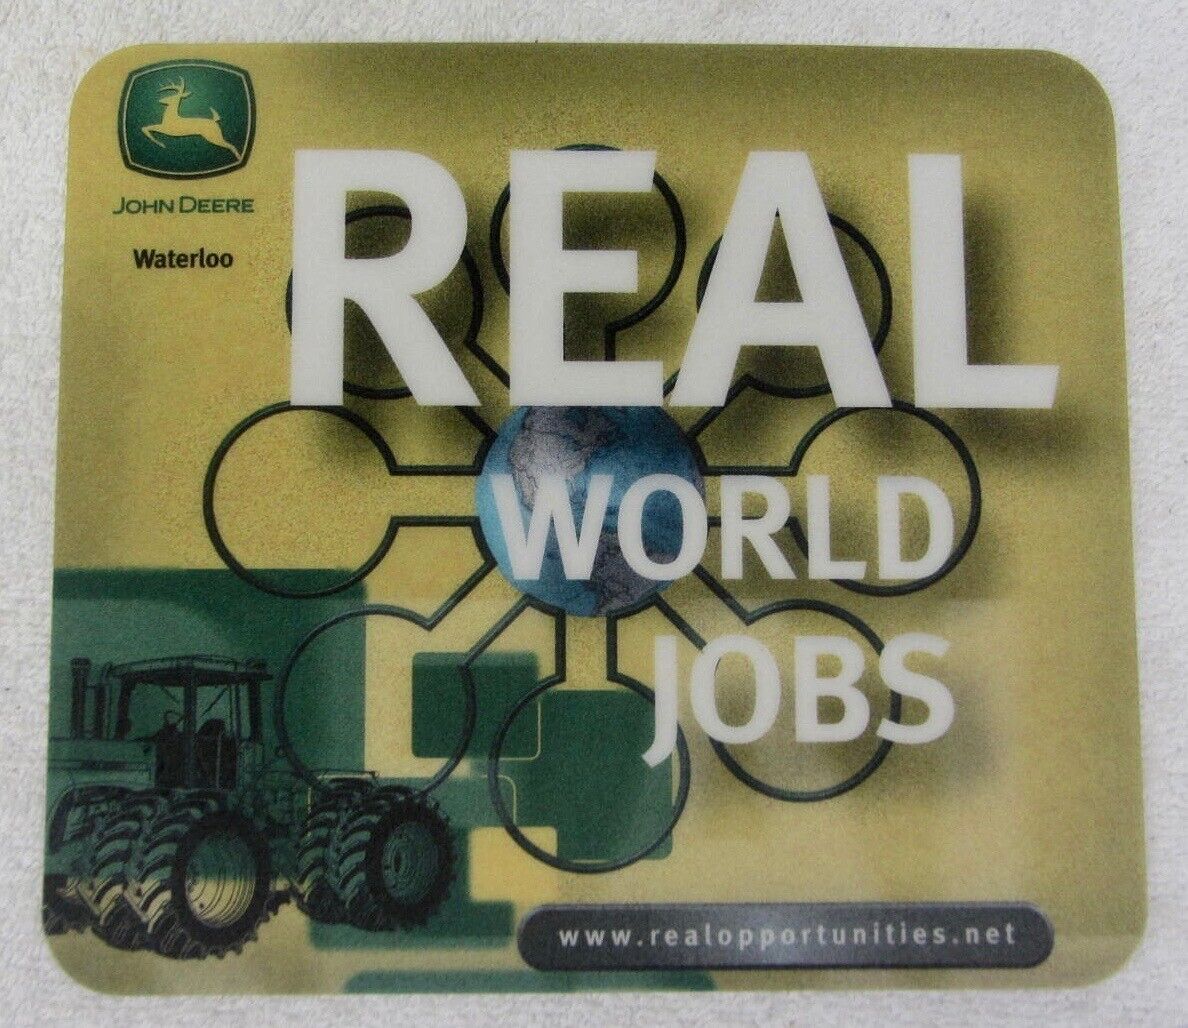 Vtg John Deere Waterloo Tractor EMPLOYEE MOUSE PAD 'Real Jobs' Macbook Hp Dell